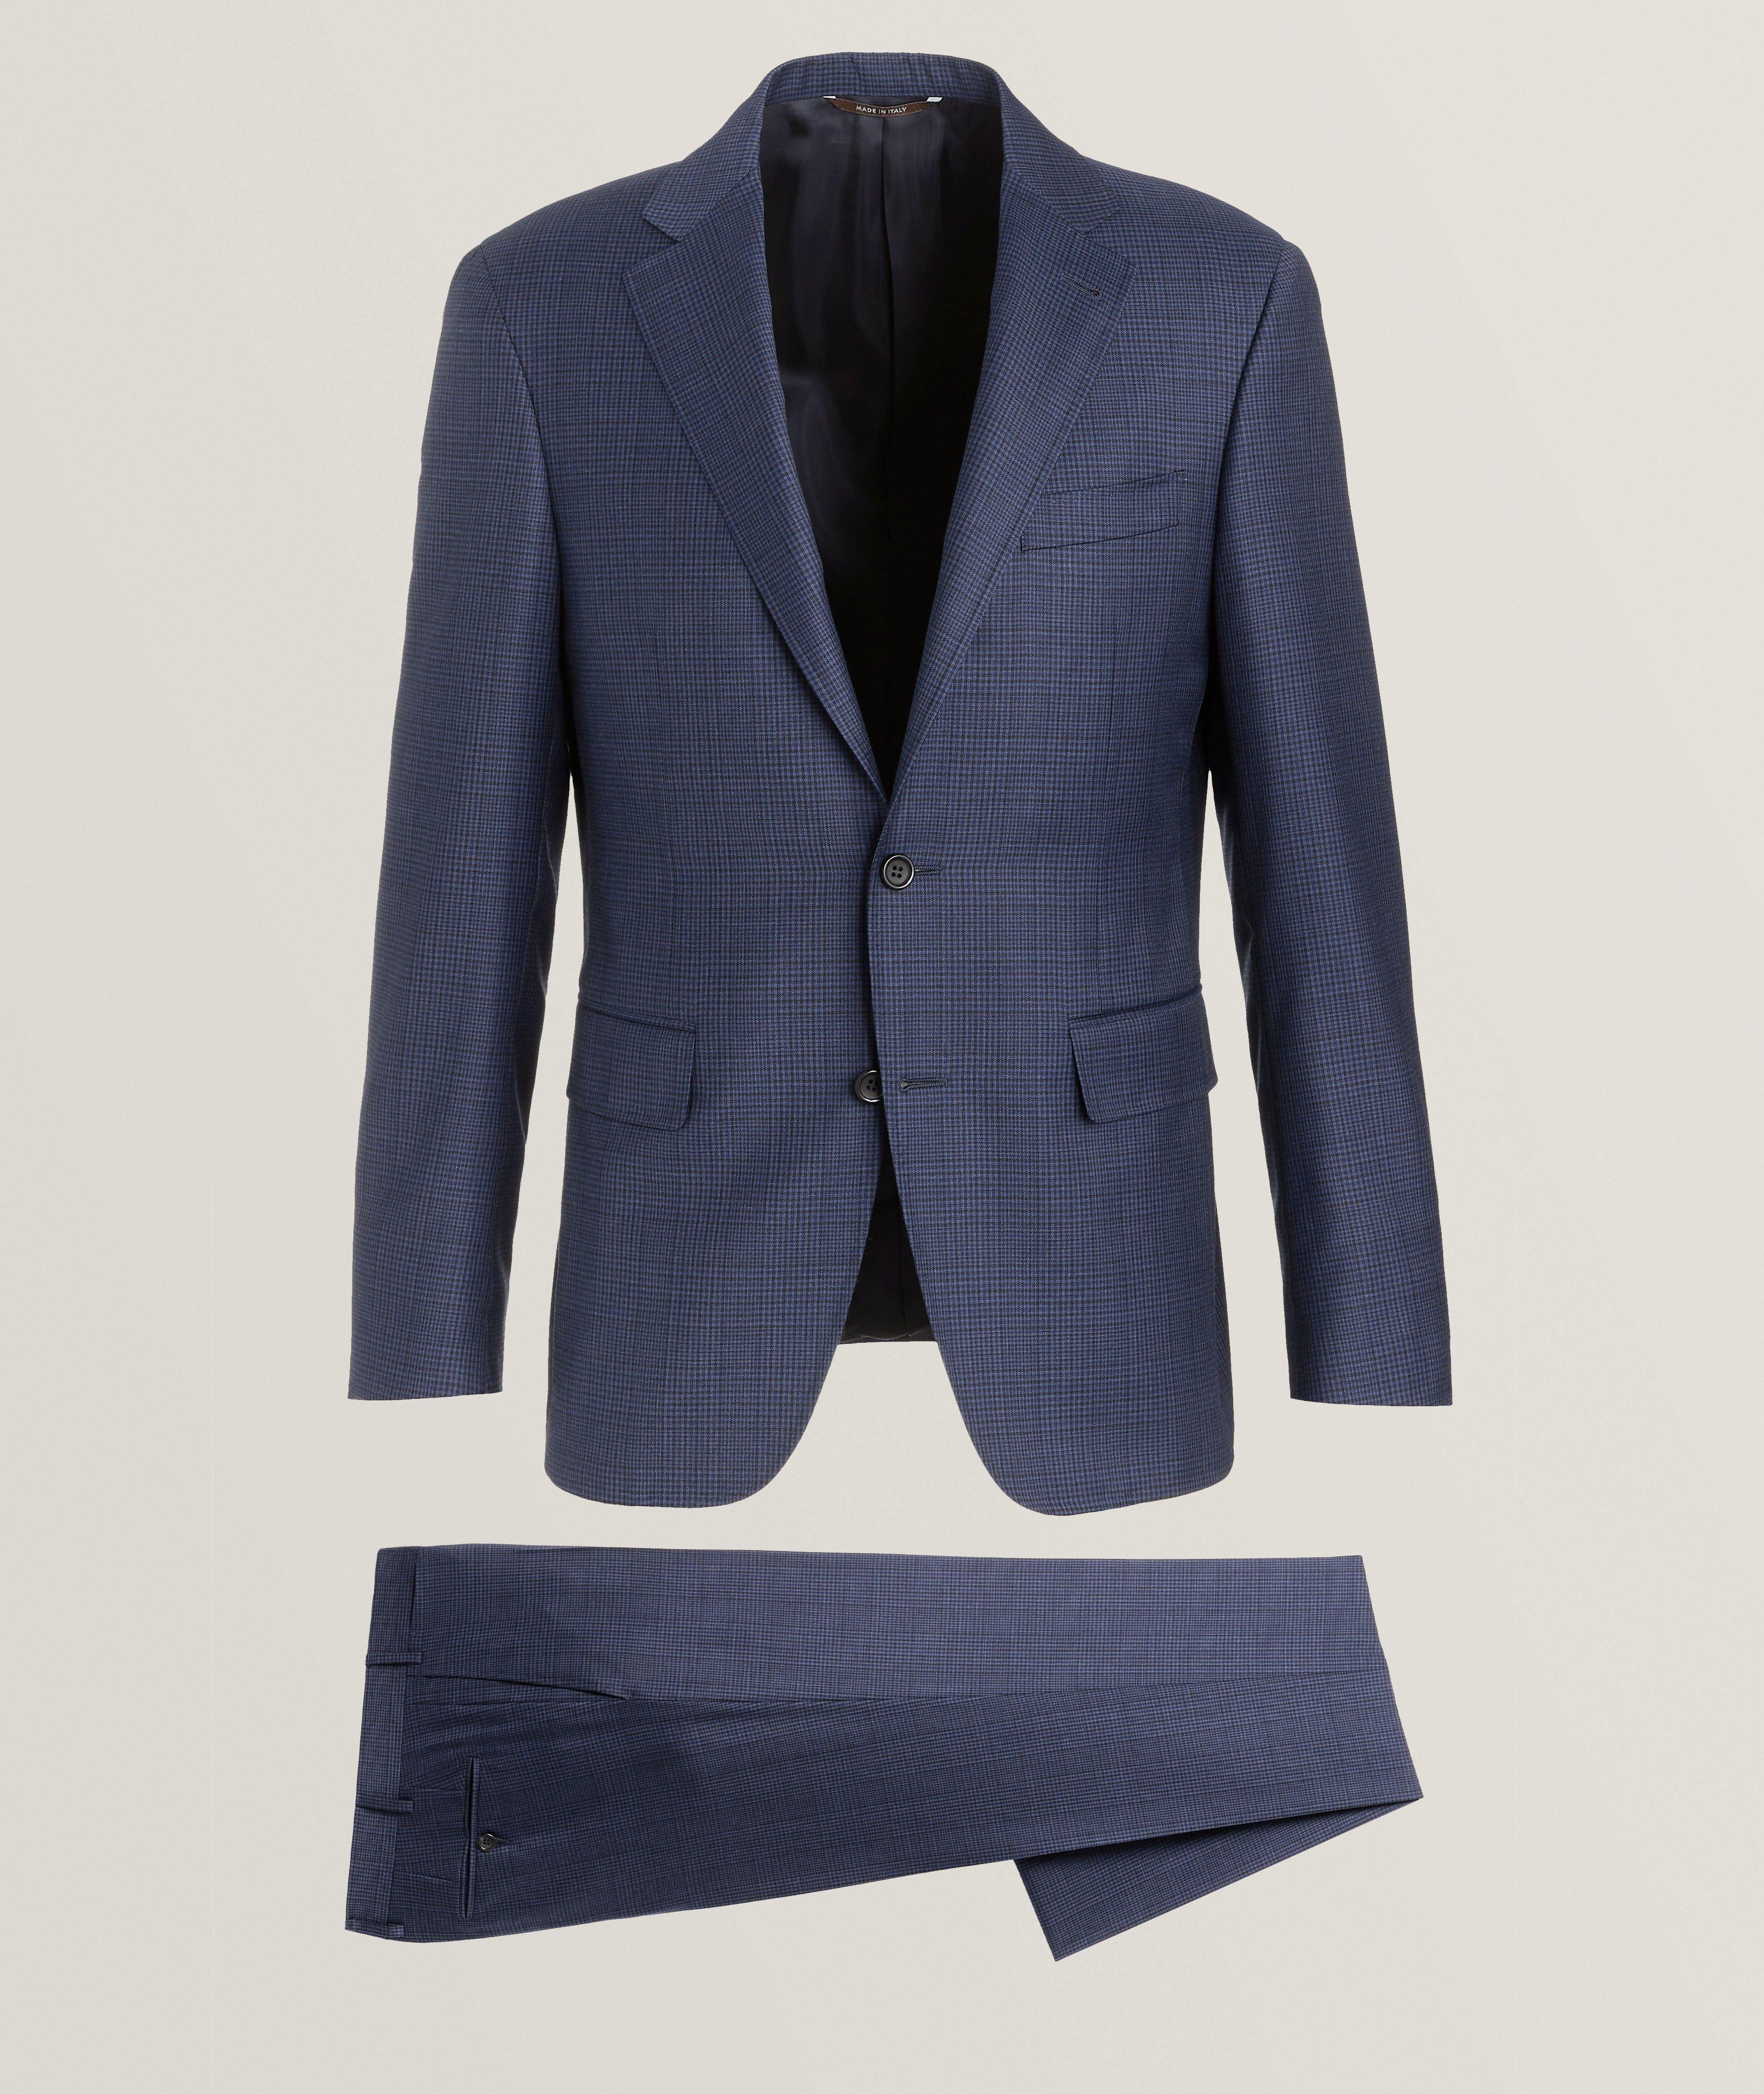 Kei Checkered Wool Suit  image 0